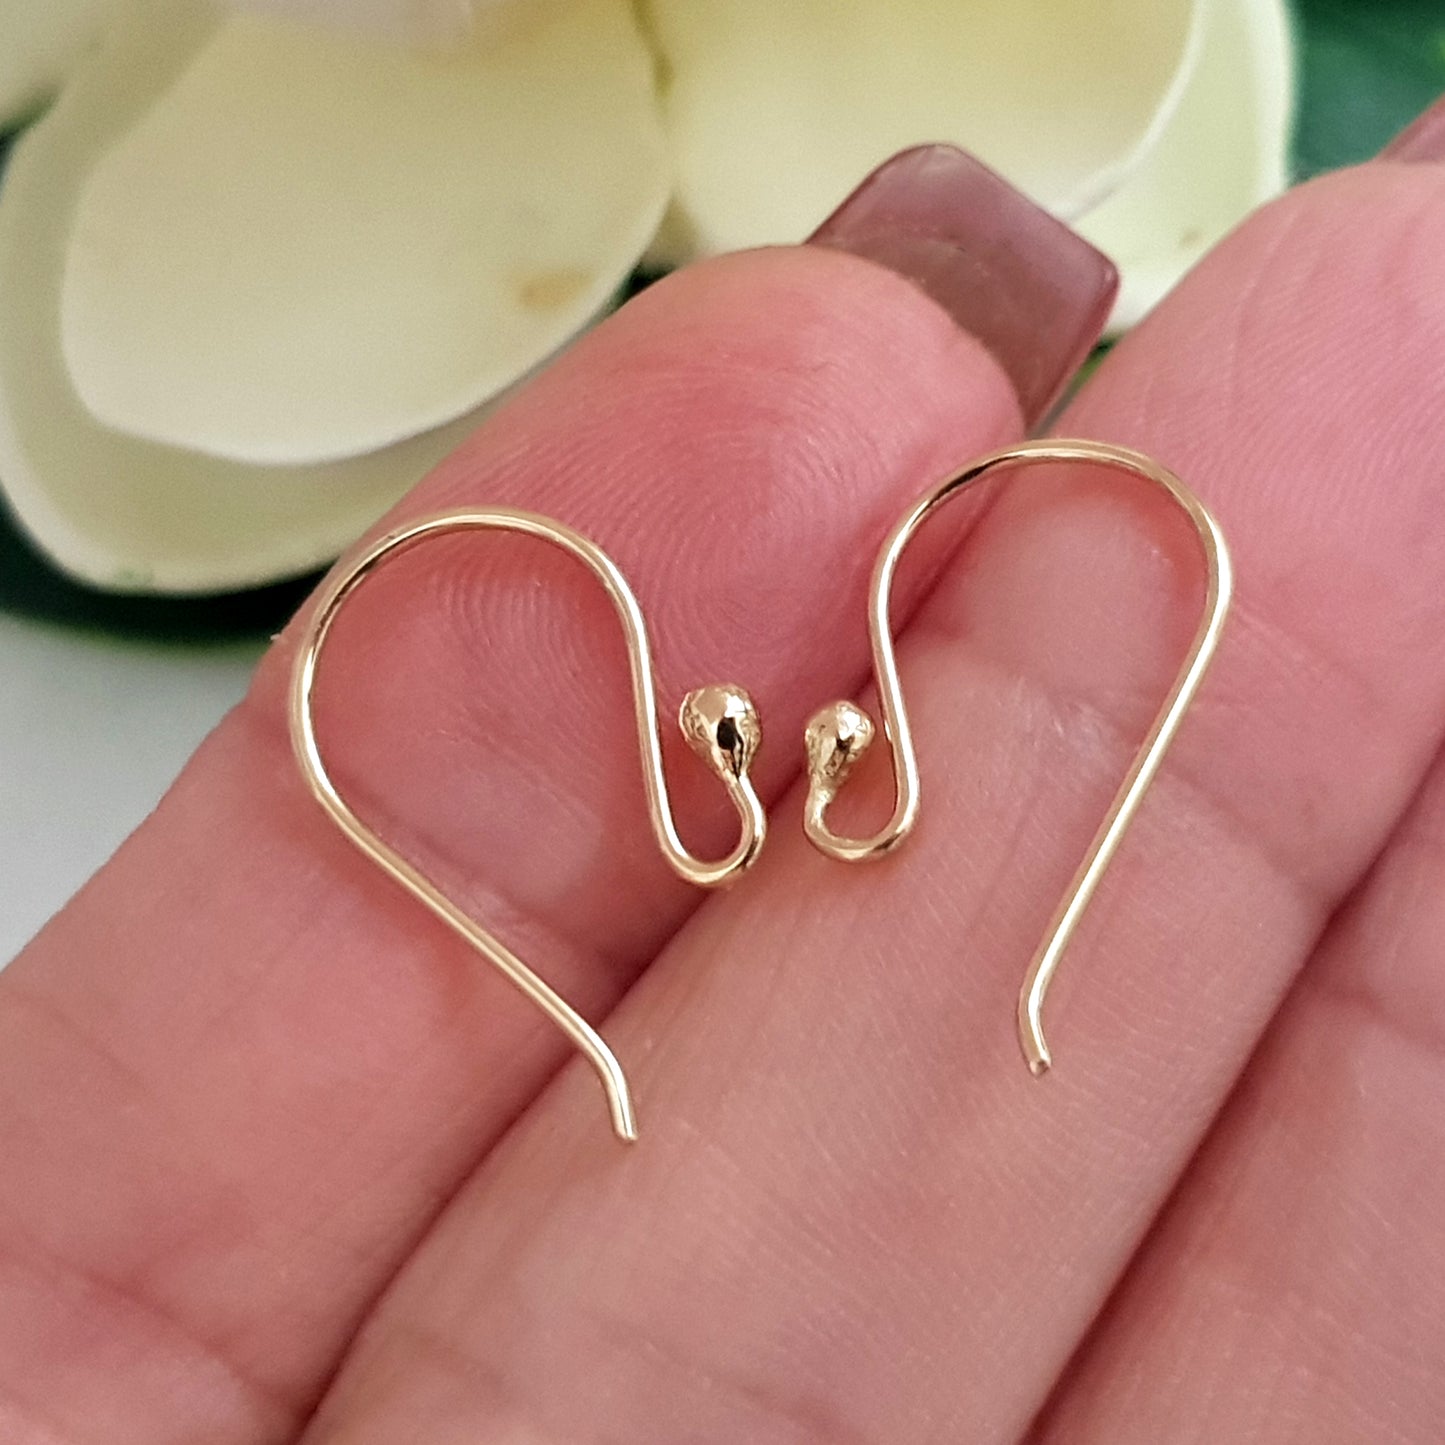 Earring Hooks - Balled Ends 9ct Yellow Gold Hooks Handmade Quality Findings  | YG9-011EH-1 | Earring Findings